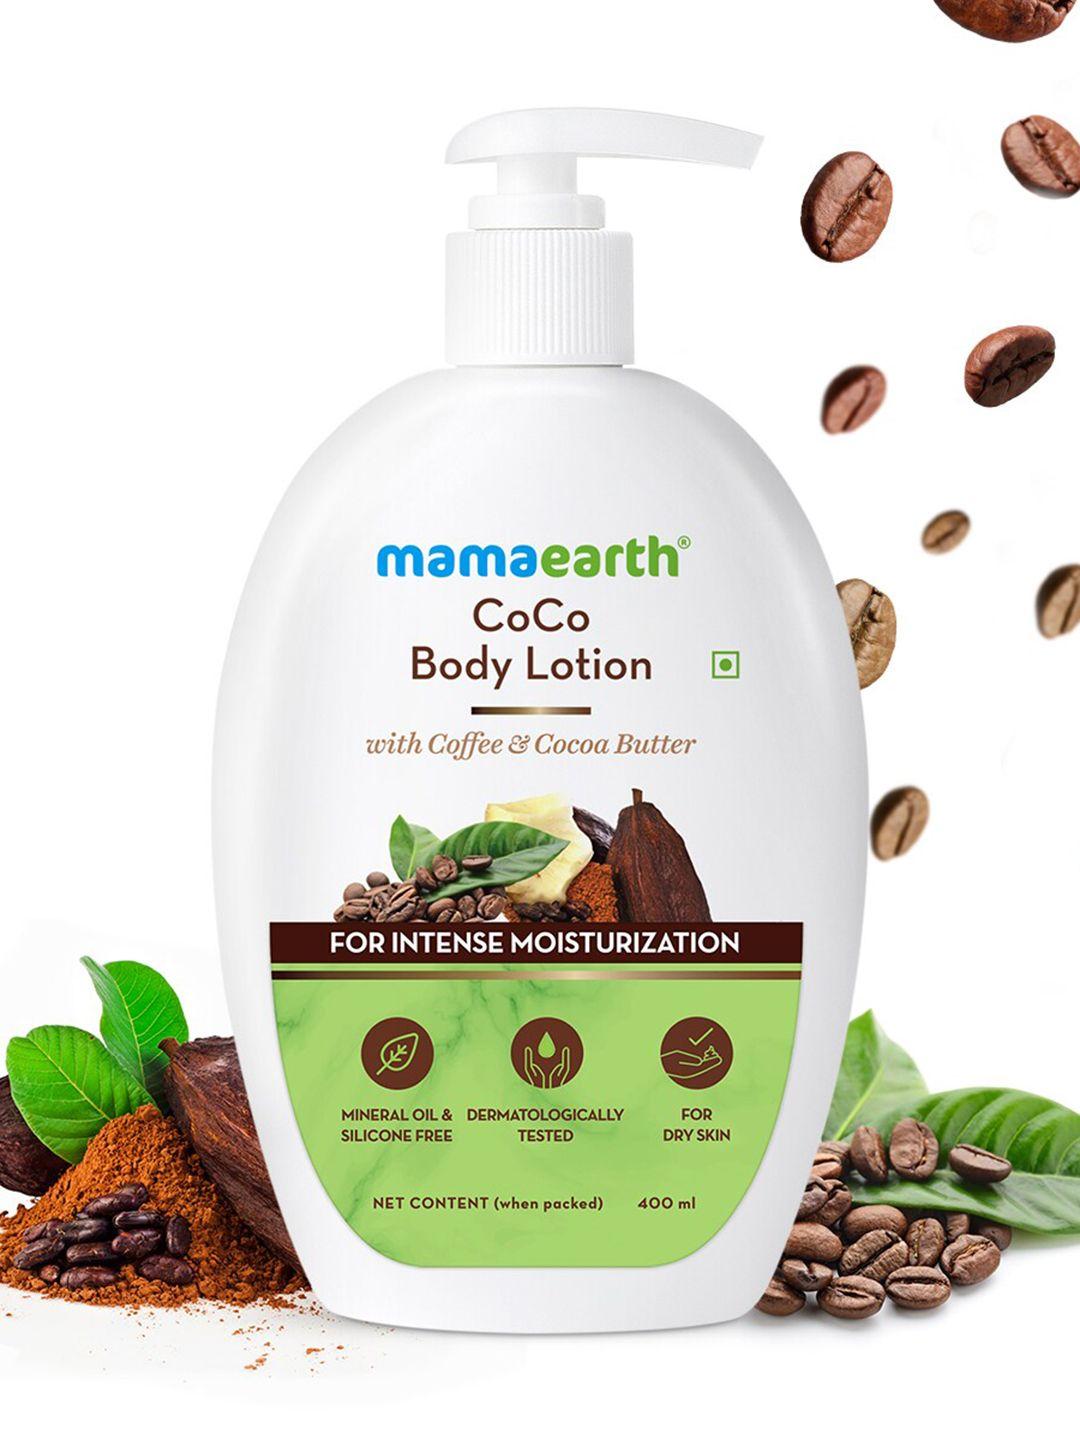 mamaearth coco body lotion with coffee & cocoa for intense moisturization 400 ml